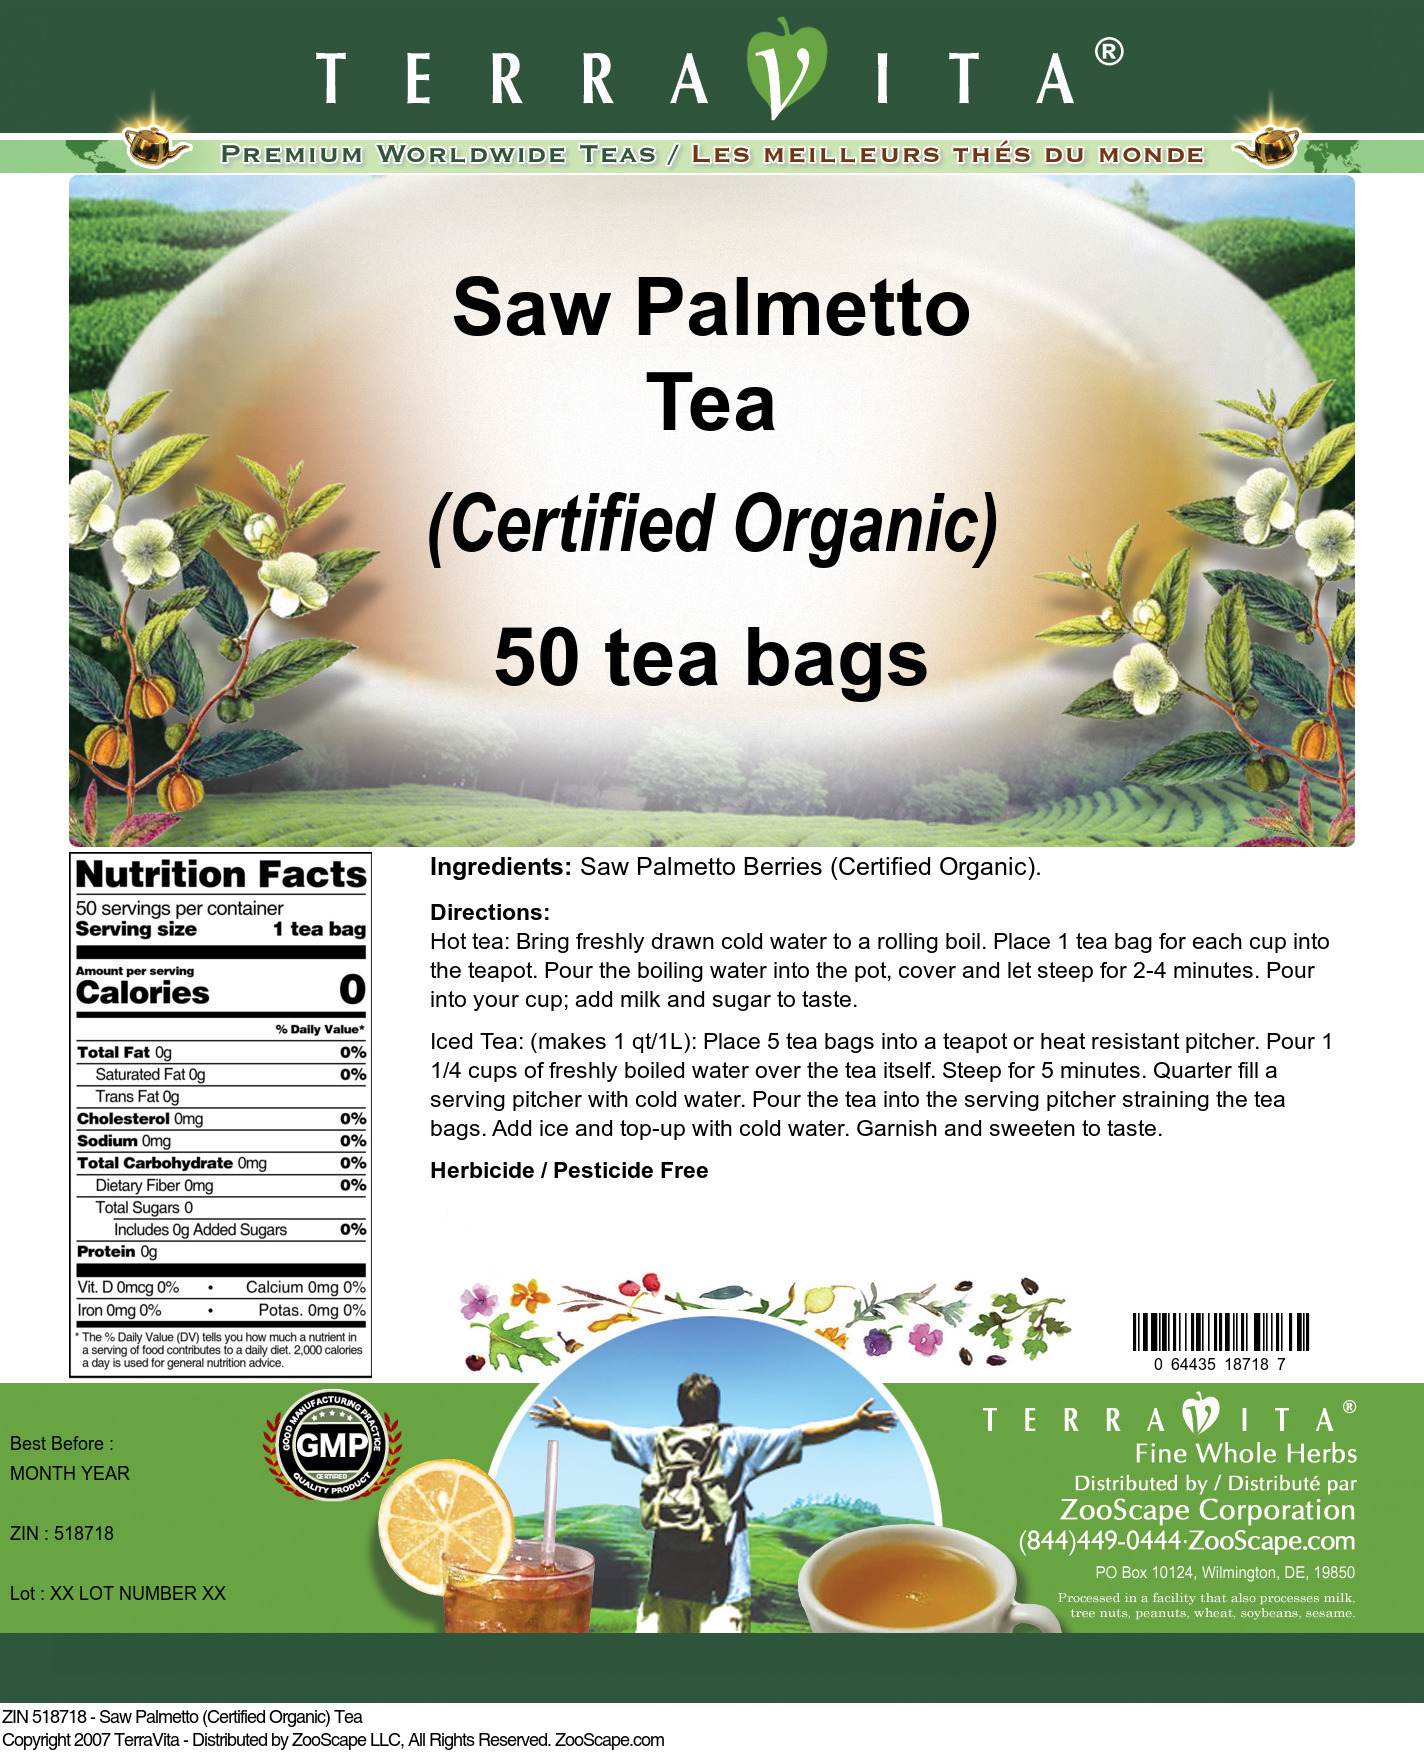 Saw Palmetto (Certified Organic) Tea - Label